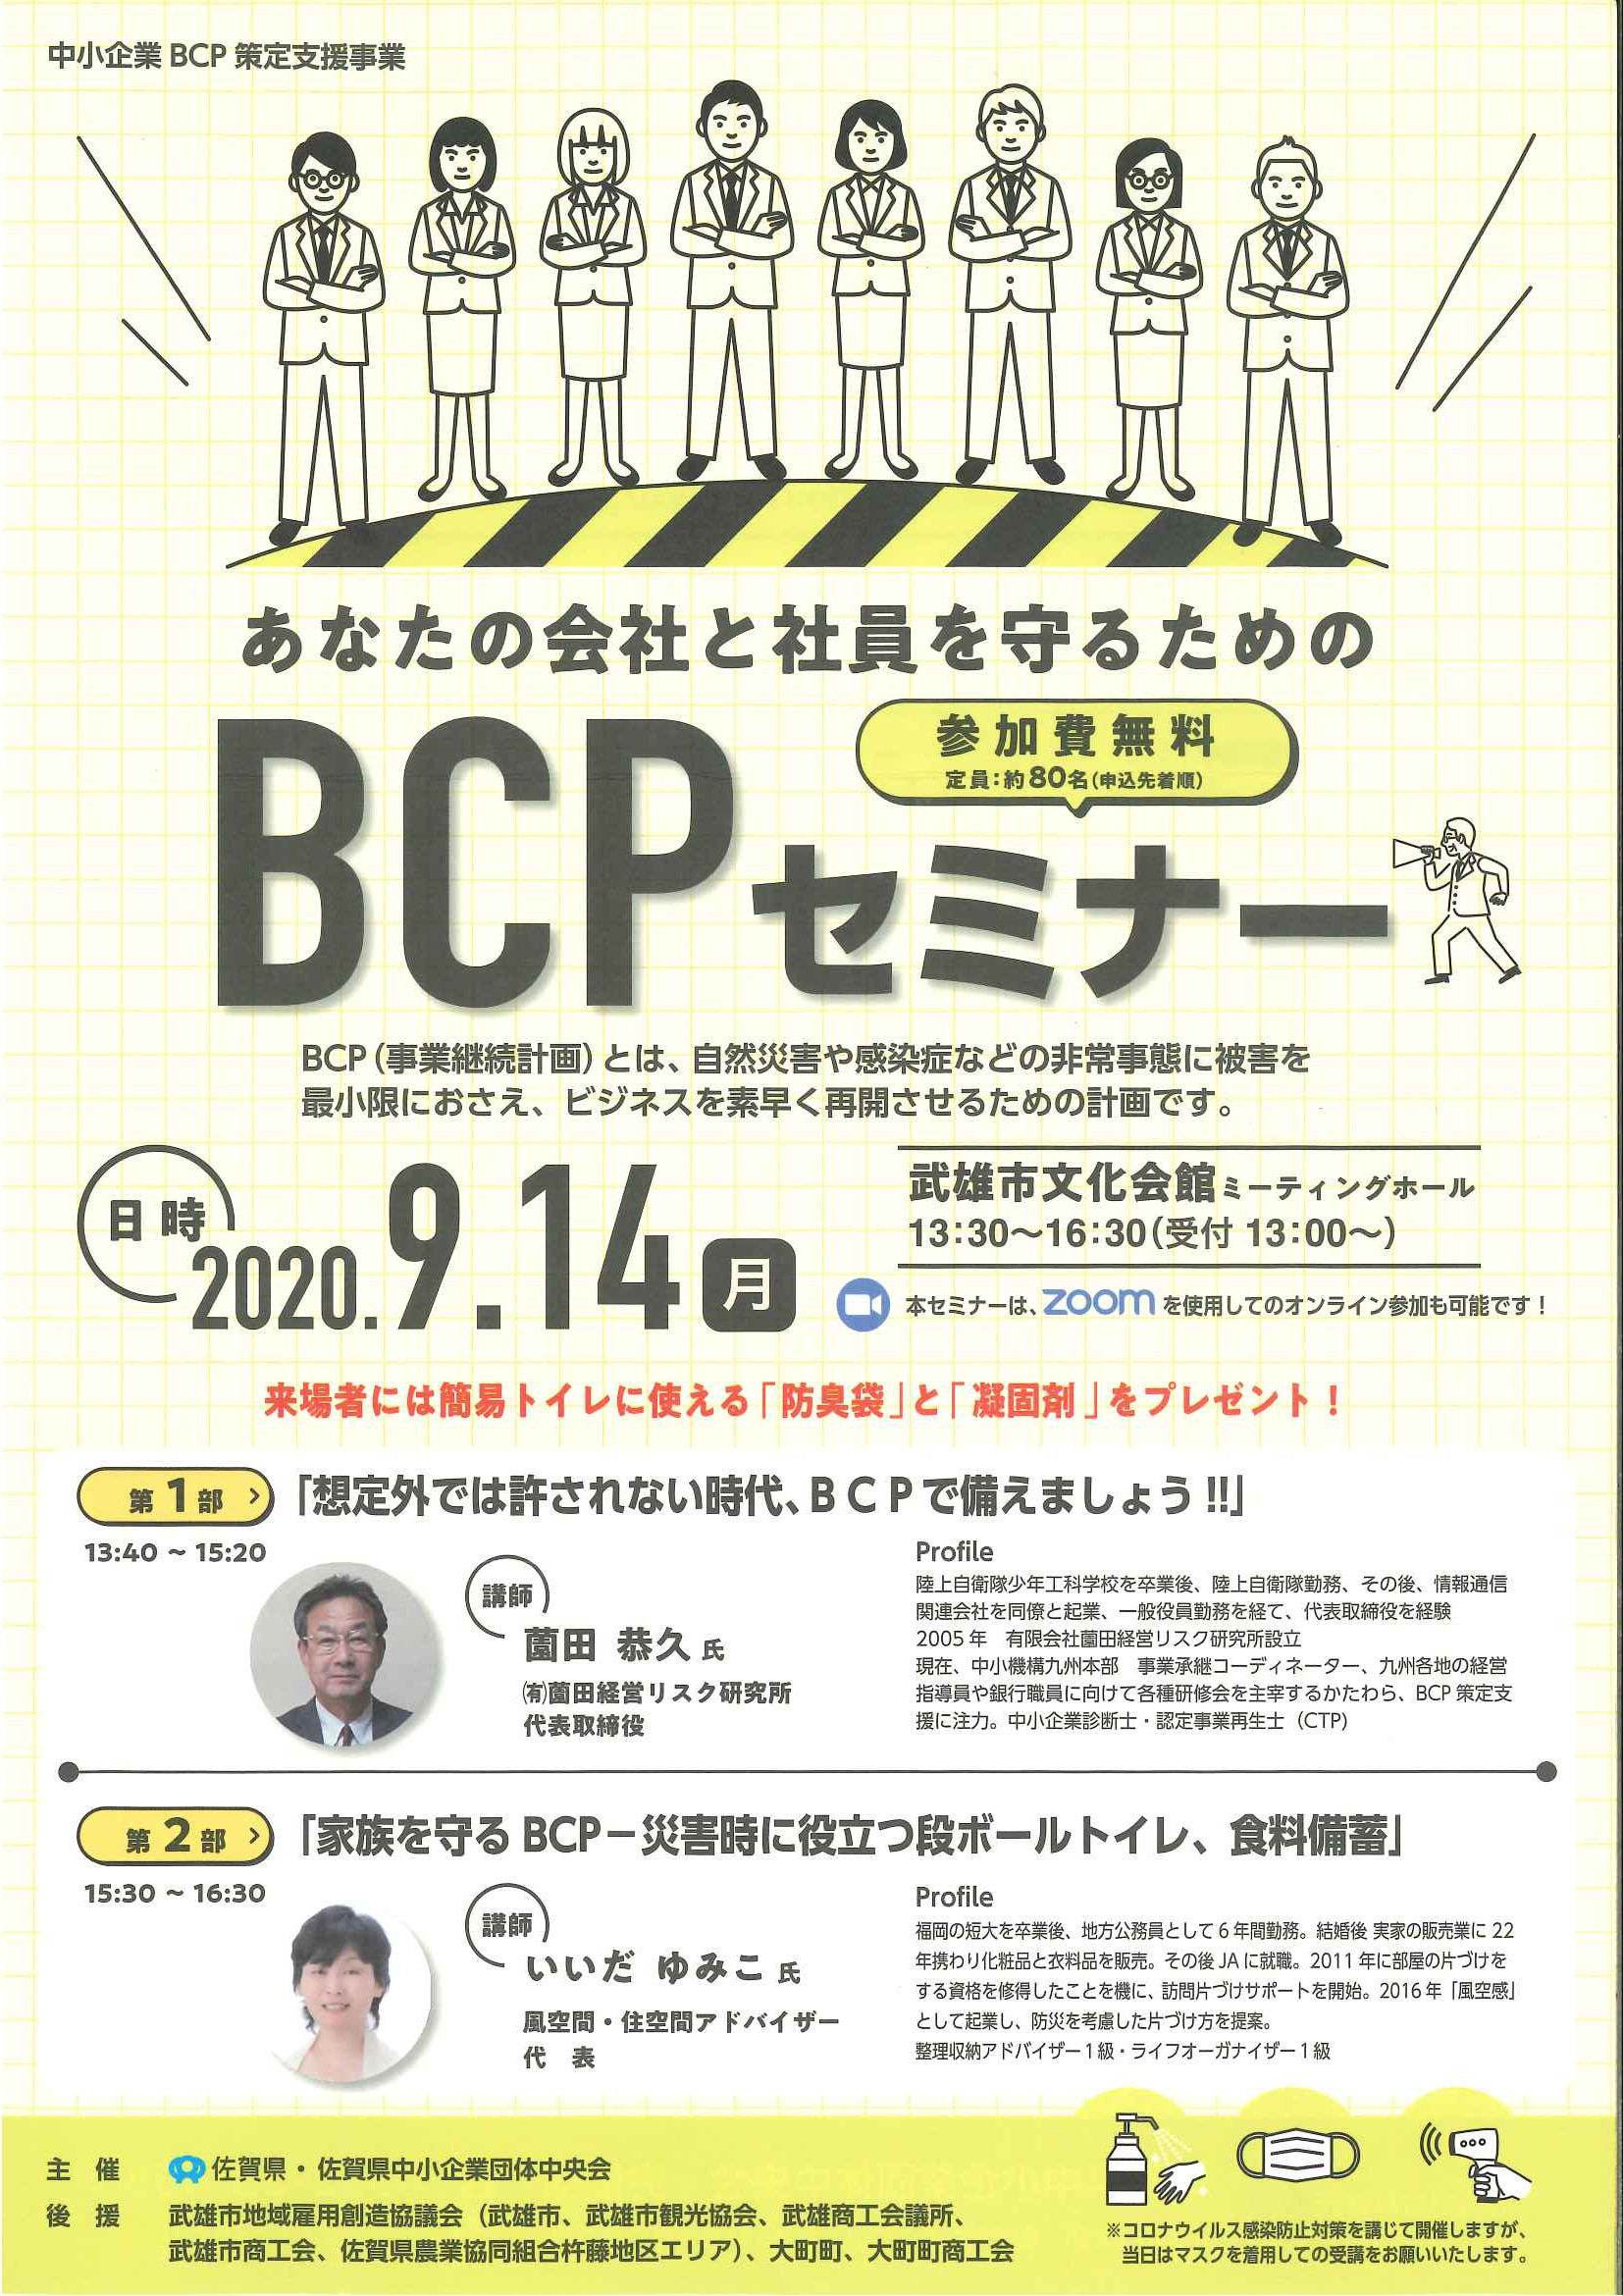 BCPセミナー開催について